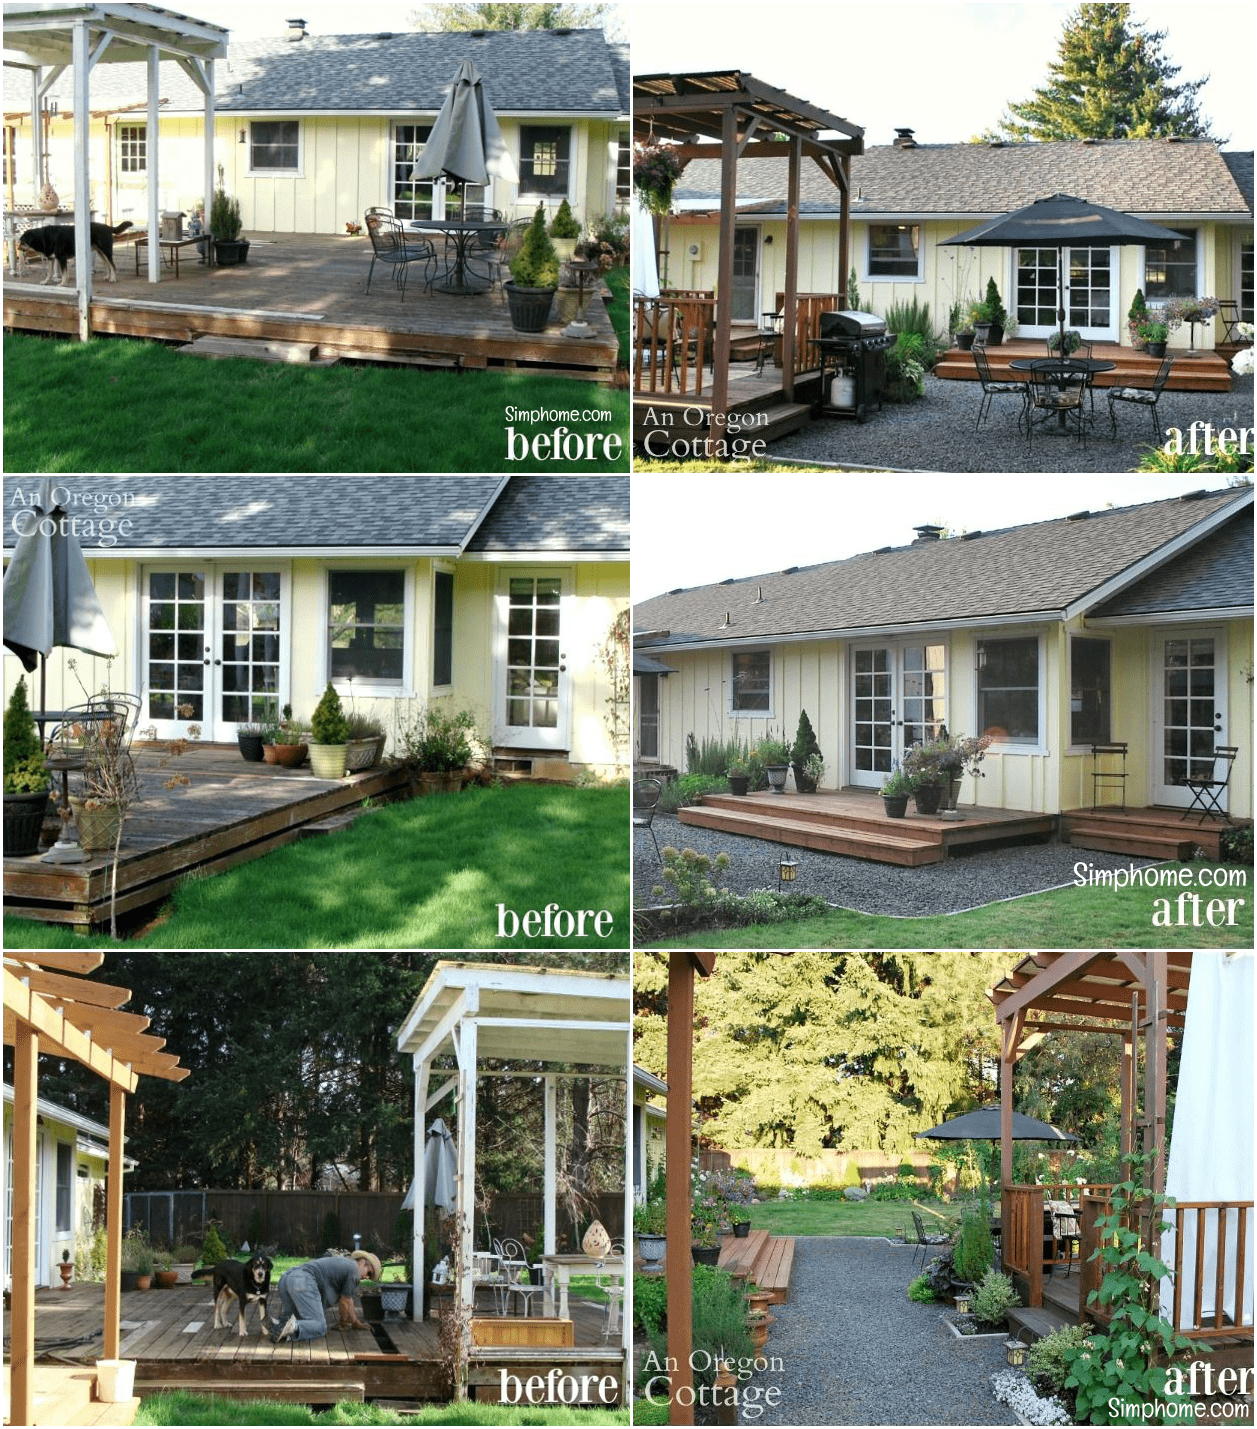 5.More Outdoor Living Areas by Simphome.com